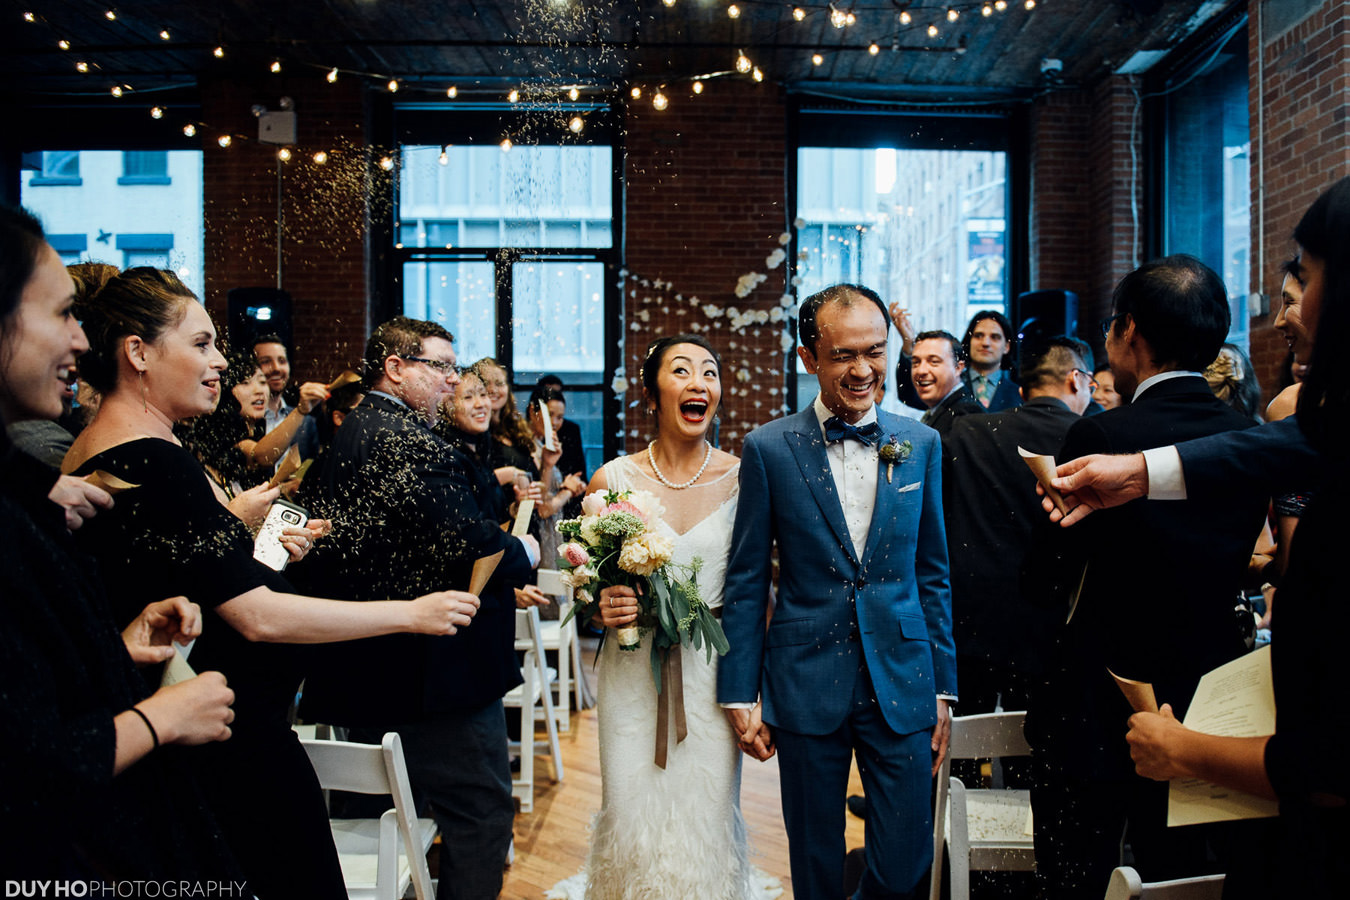 DUMBO Loft wedding photo | Brookyln, New York | Duy Ho Photography